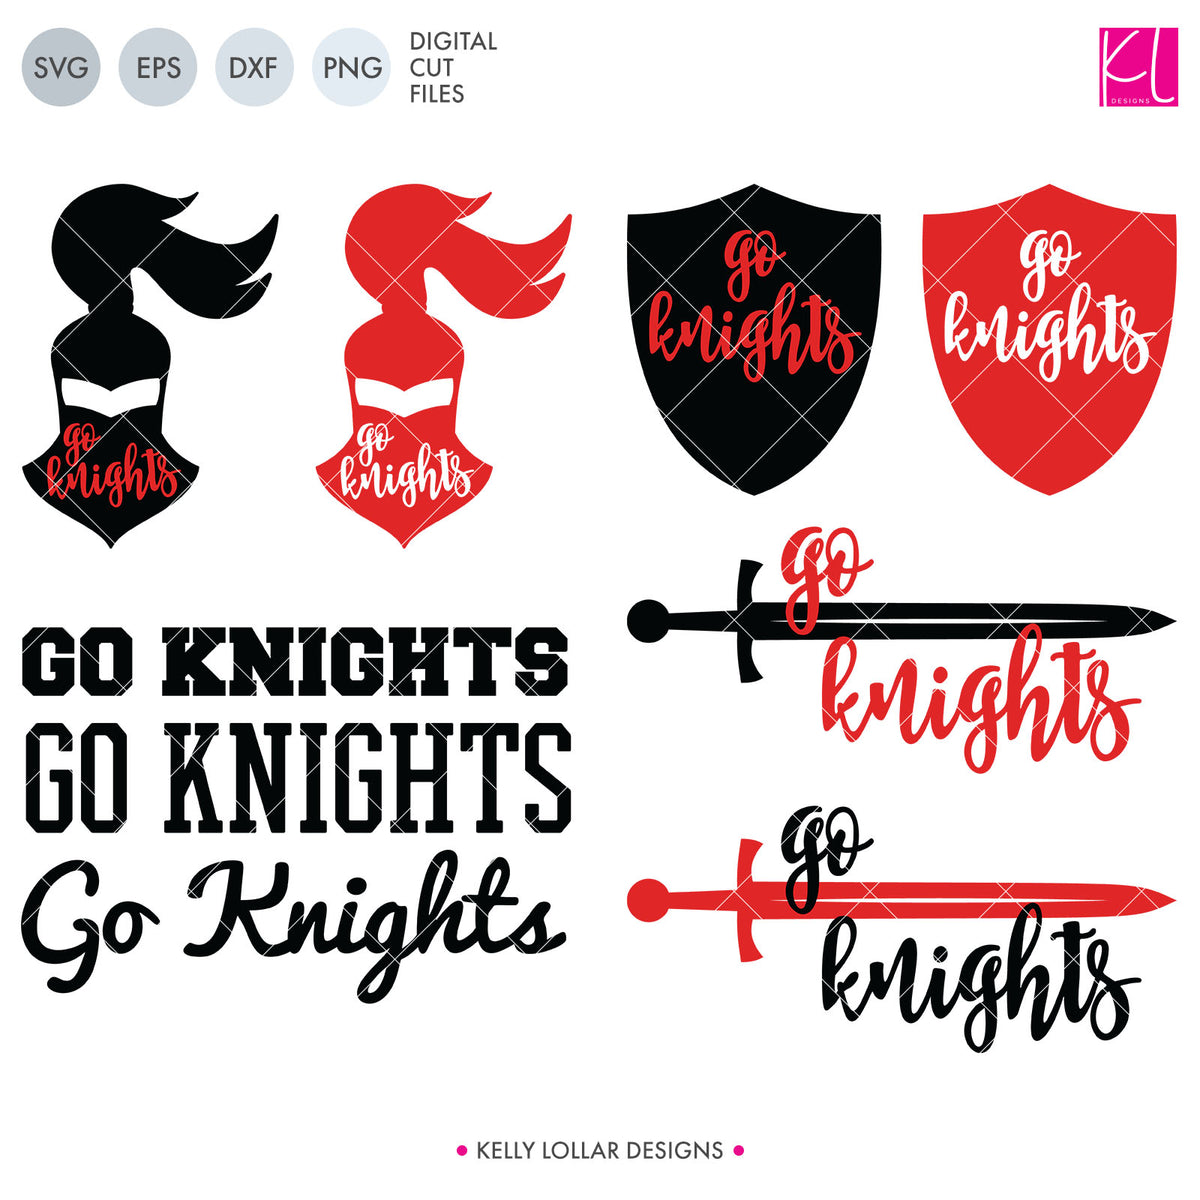 Knights Mascot Bundle | SVG DXF EPS PNG Cut Files